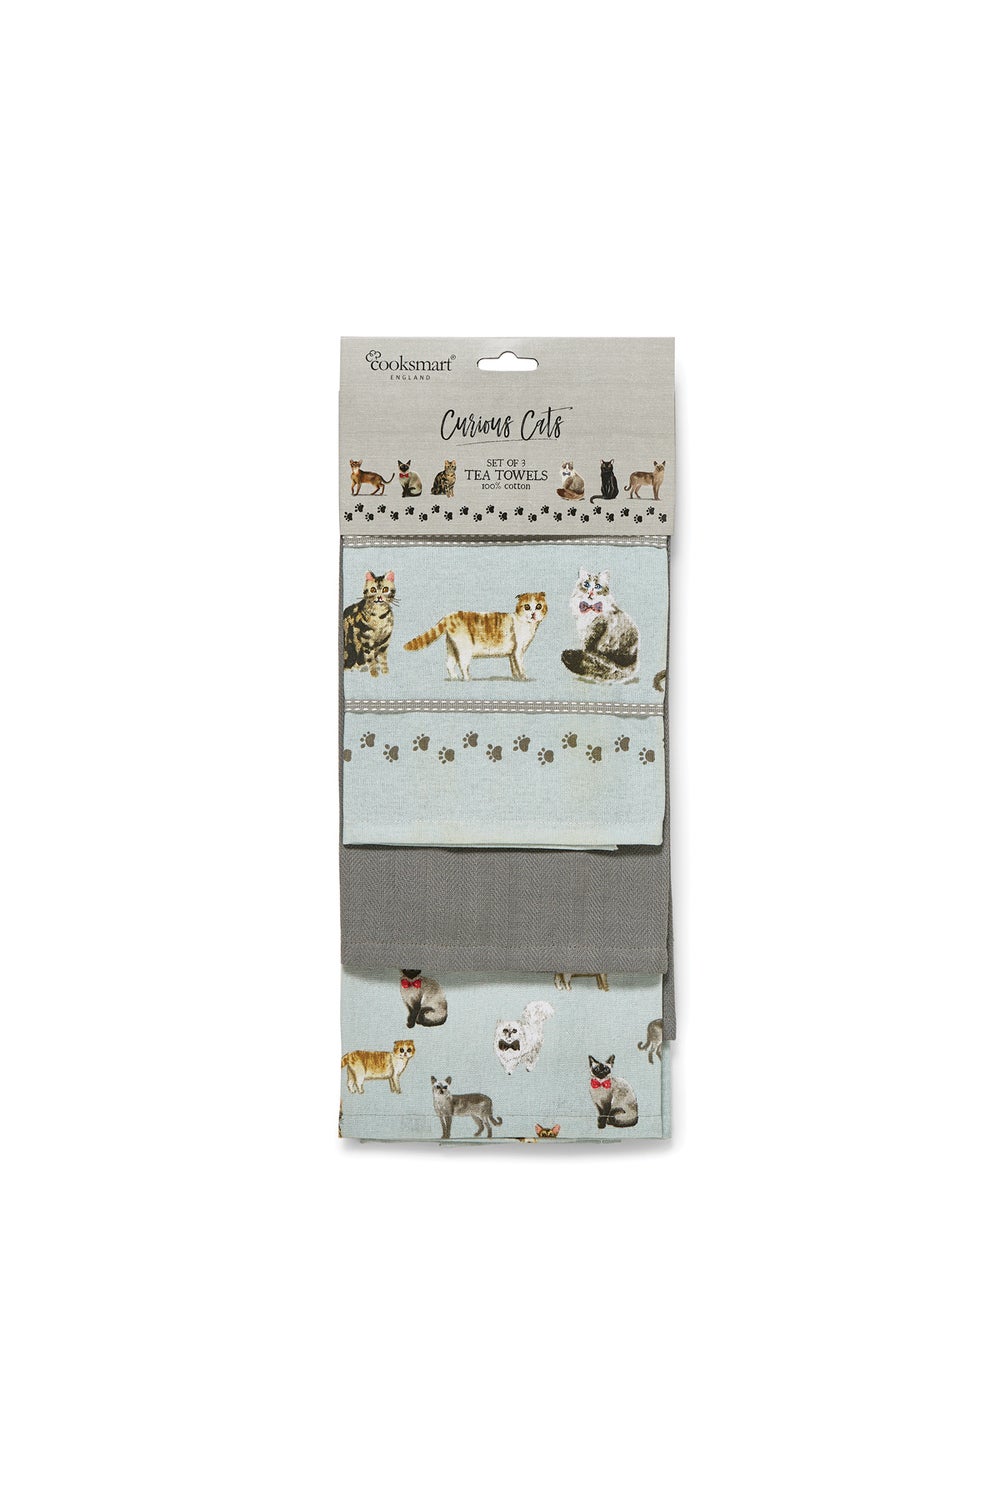 Cooksmart Curious Cats Set of 3 Tea Towels